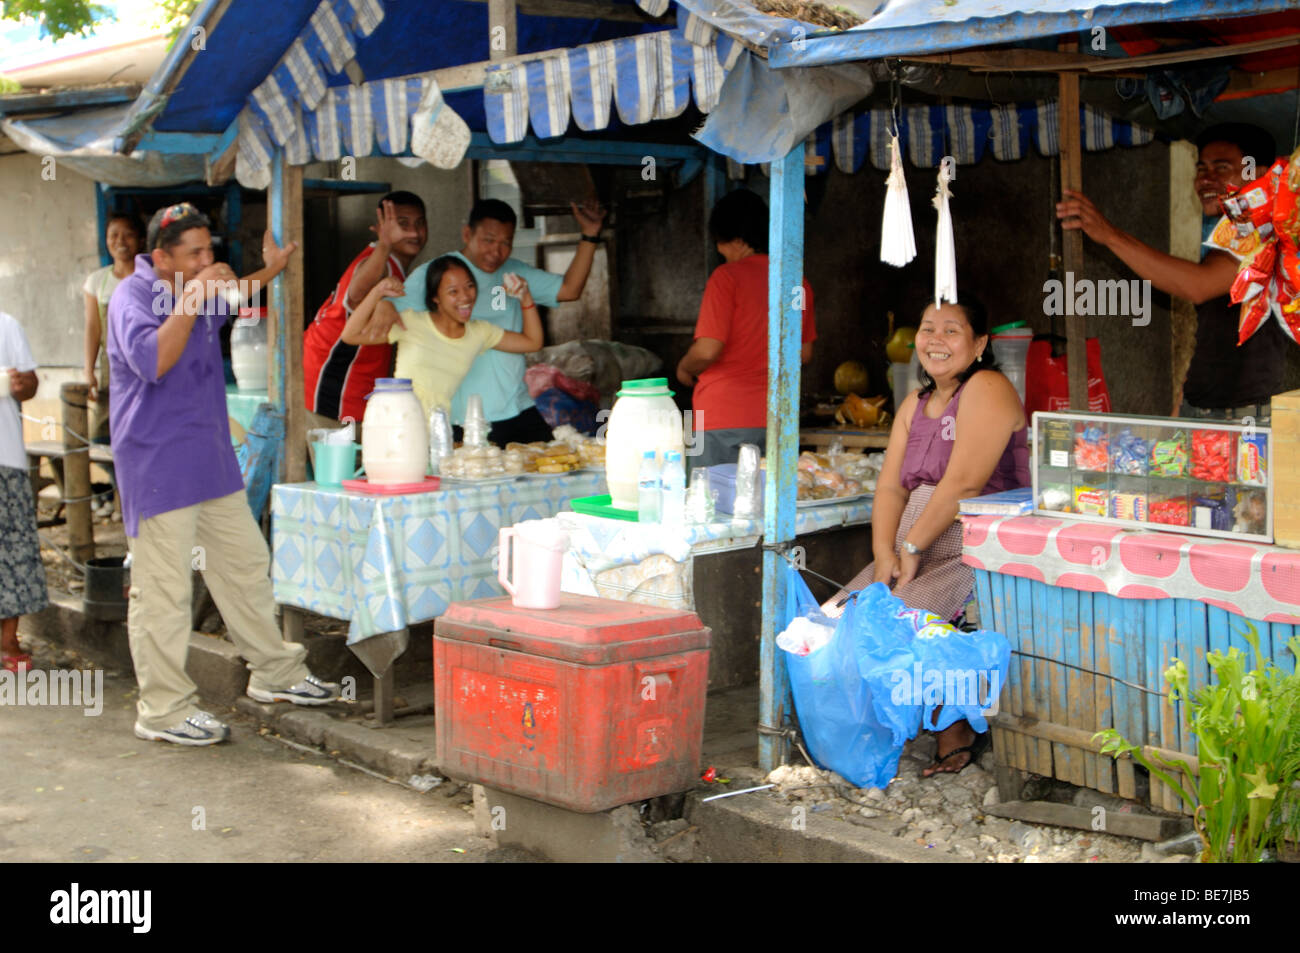 eatery tagbilaran bohol philippines Stock Photo